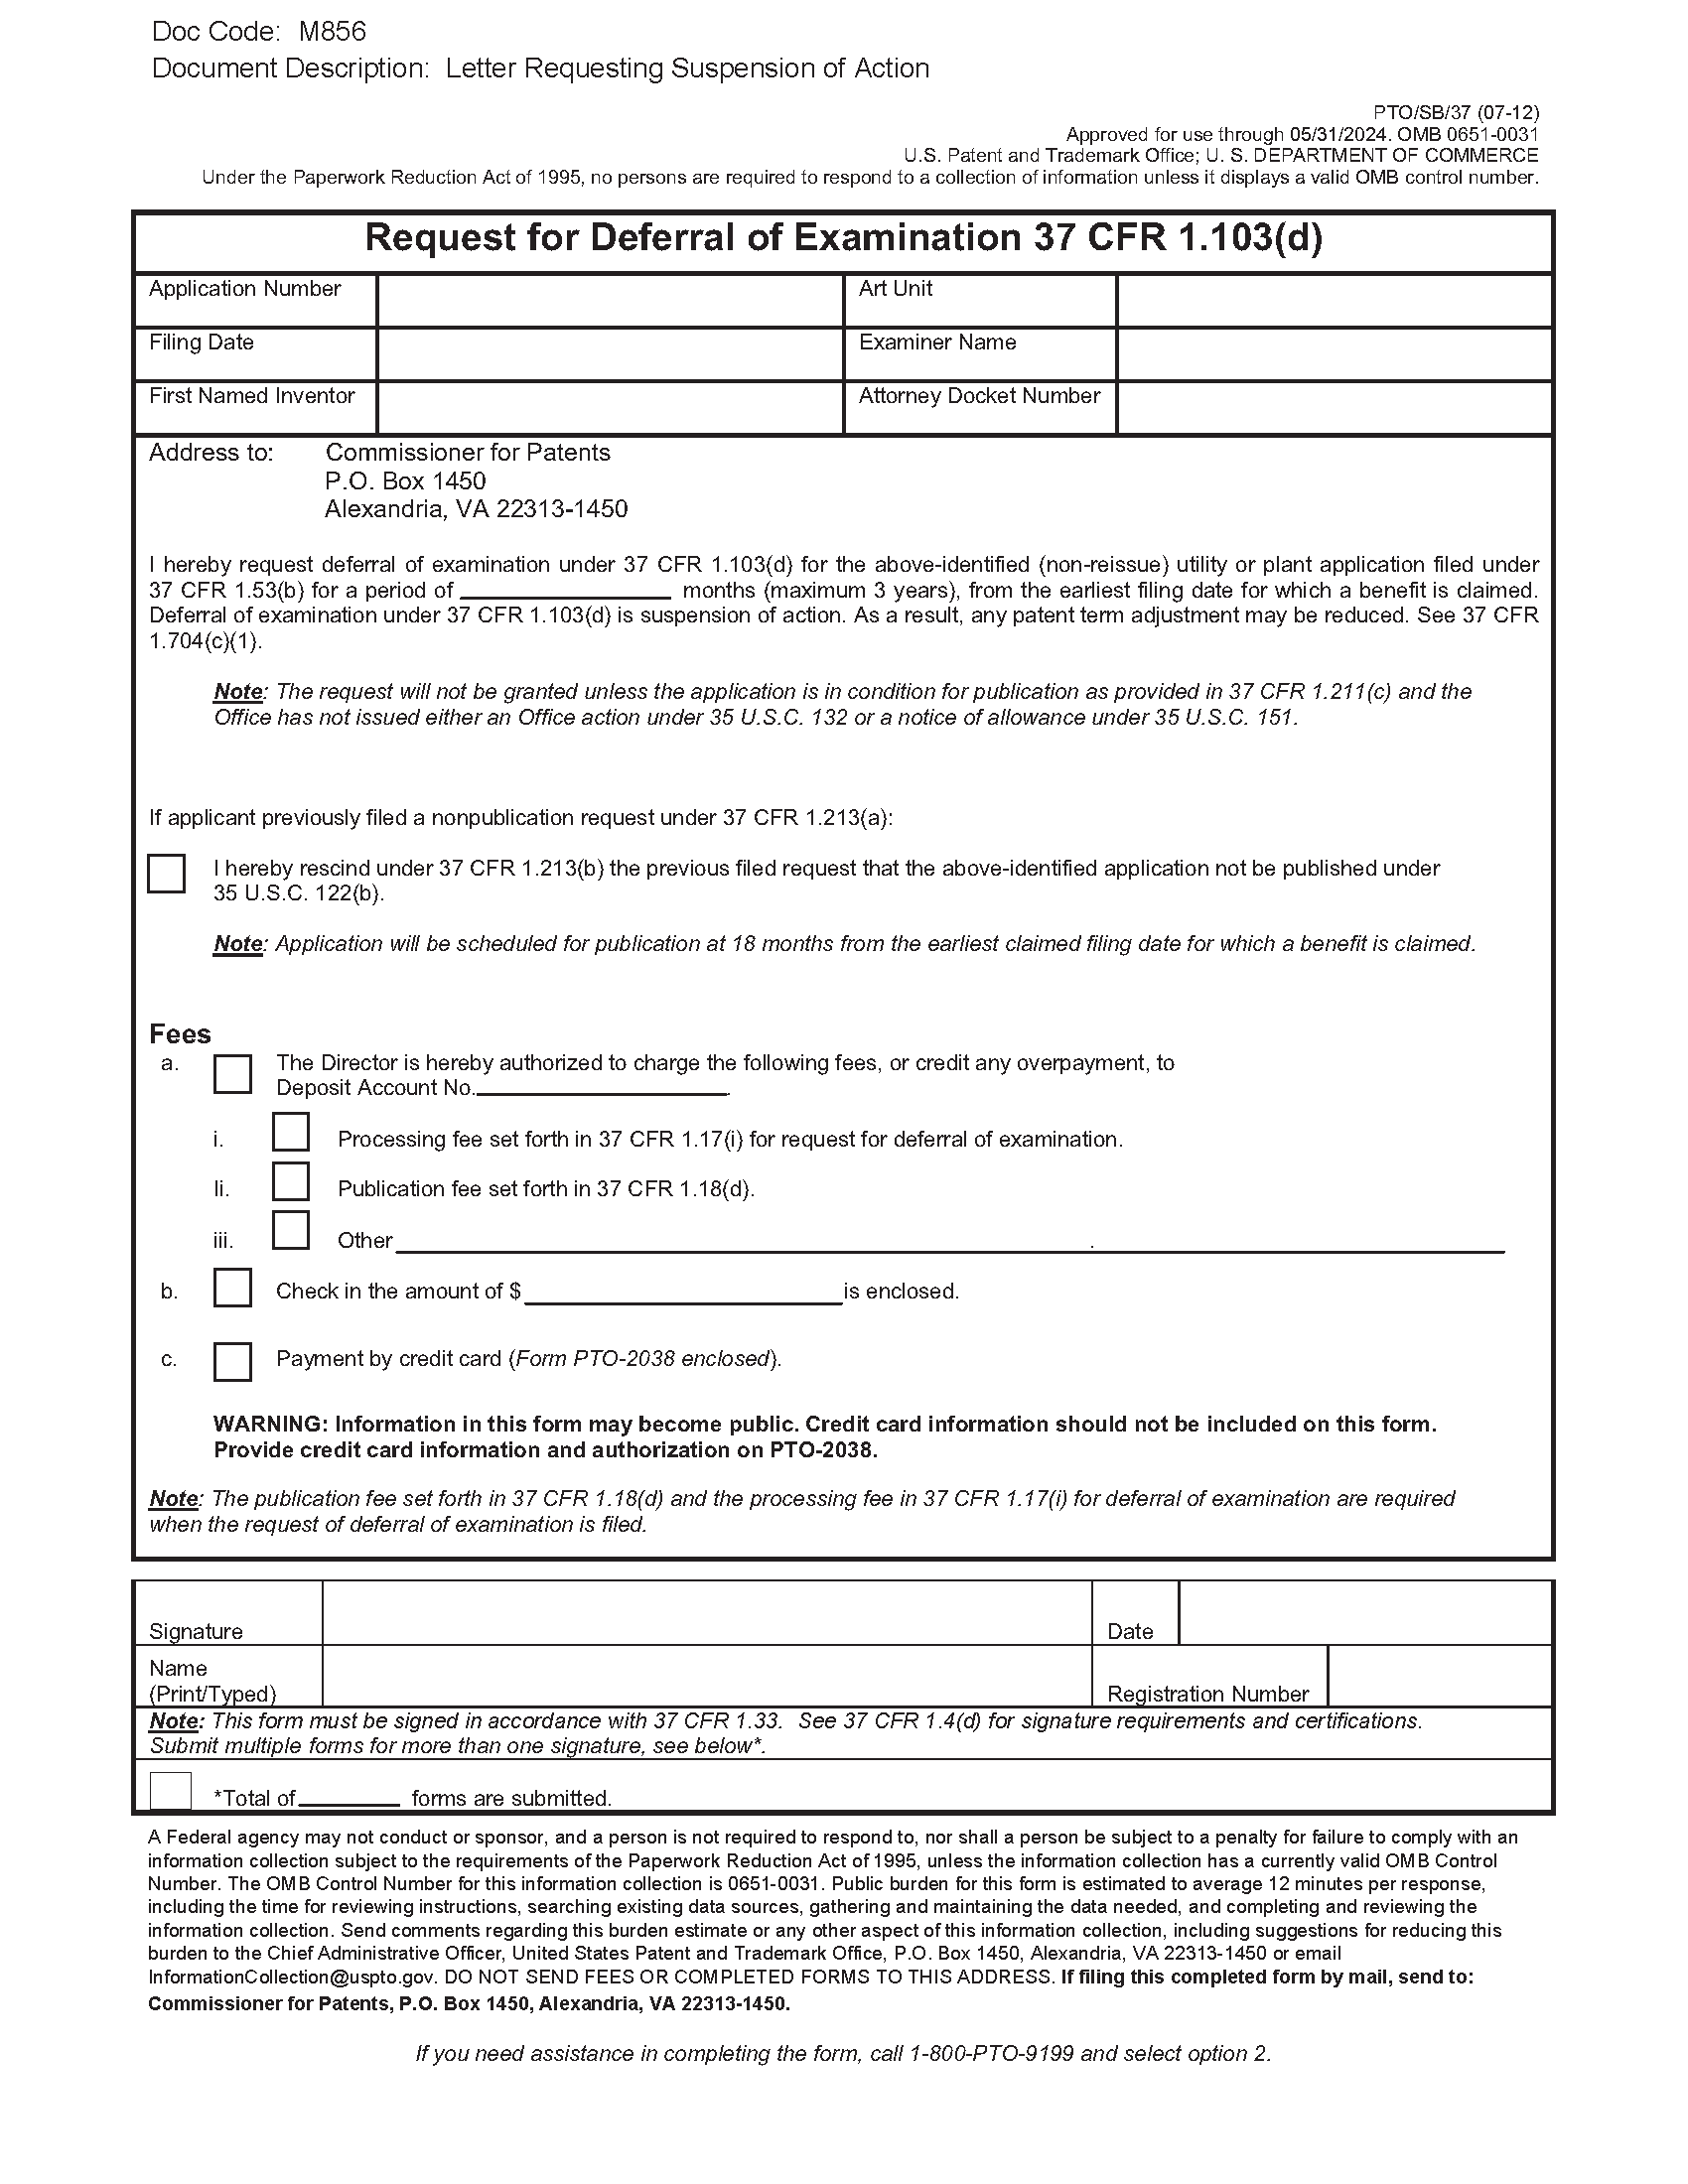 Form PTO/SB/37. Request for Deferral of Examination 37 CFR 1.103(d)